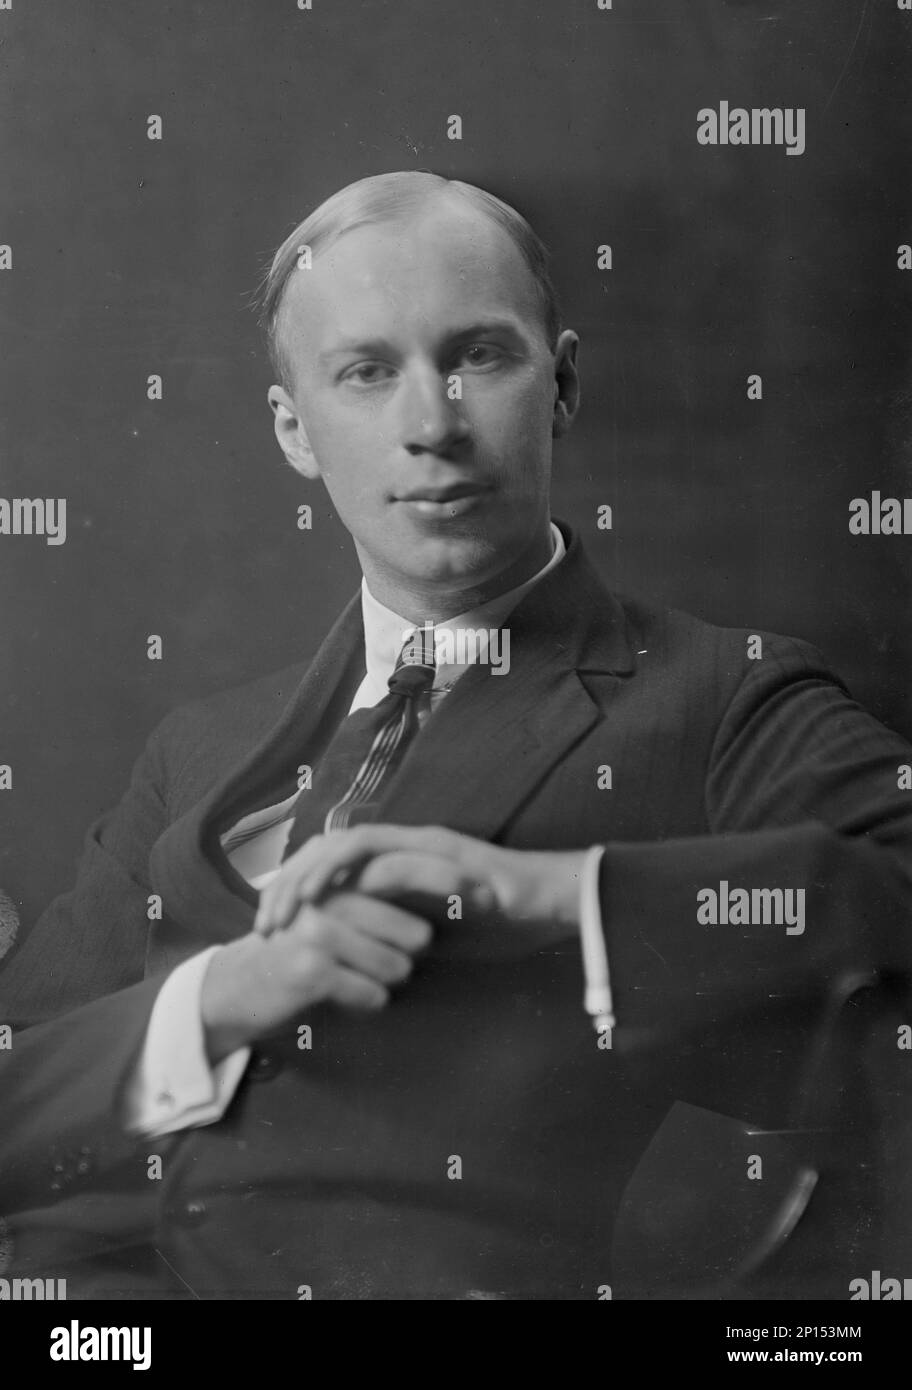 Prokofieff, portrait photograph, 1918 Sept. 27. Russian composer, musician, pianist and conductor Sergei Prokofiev. Stock Photo